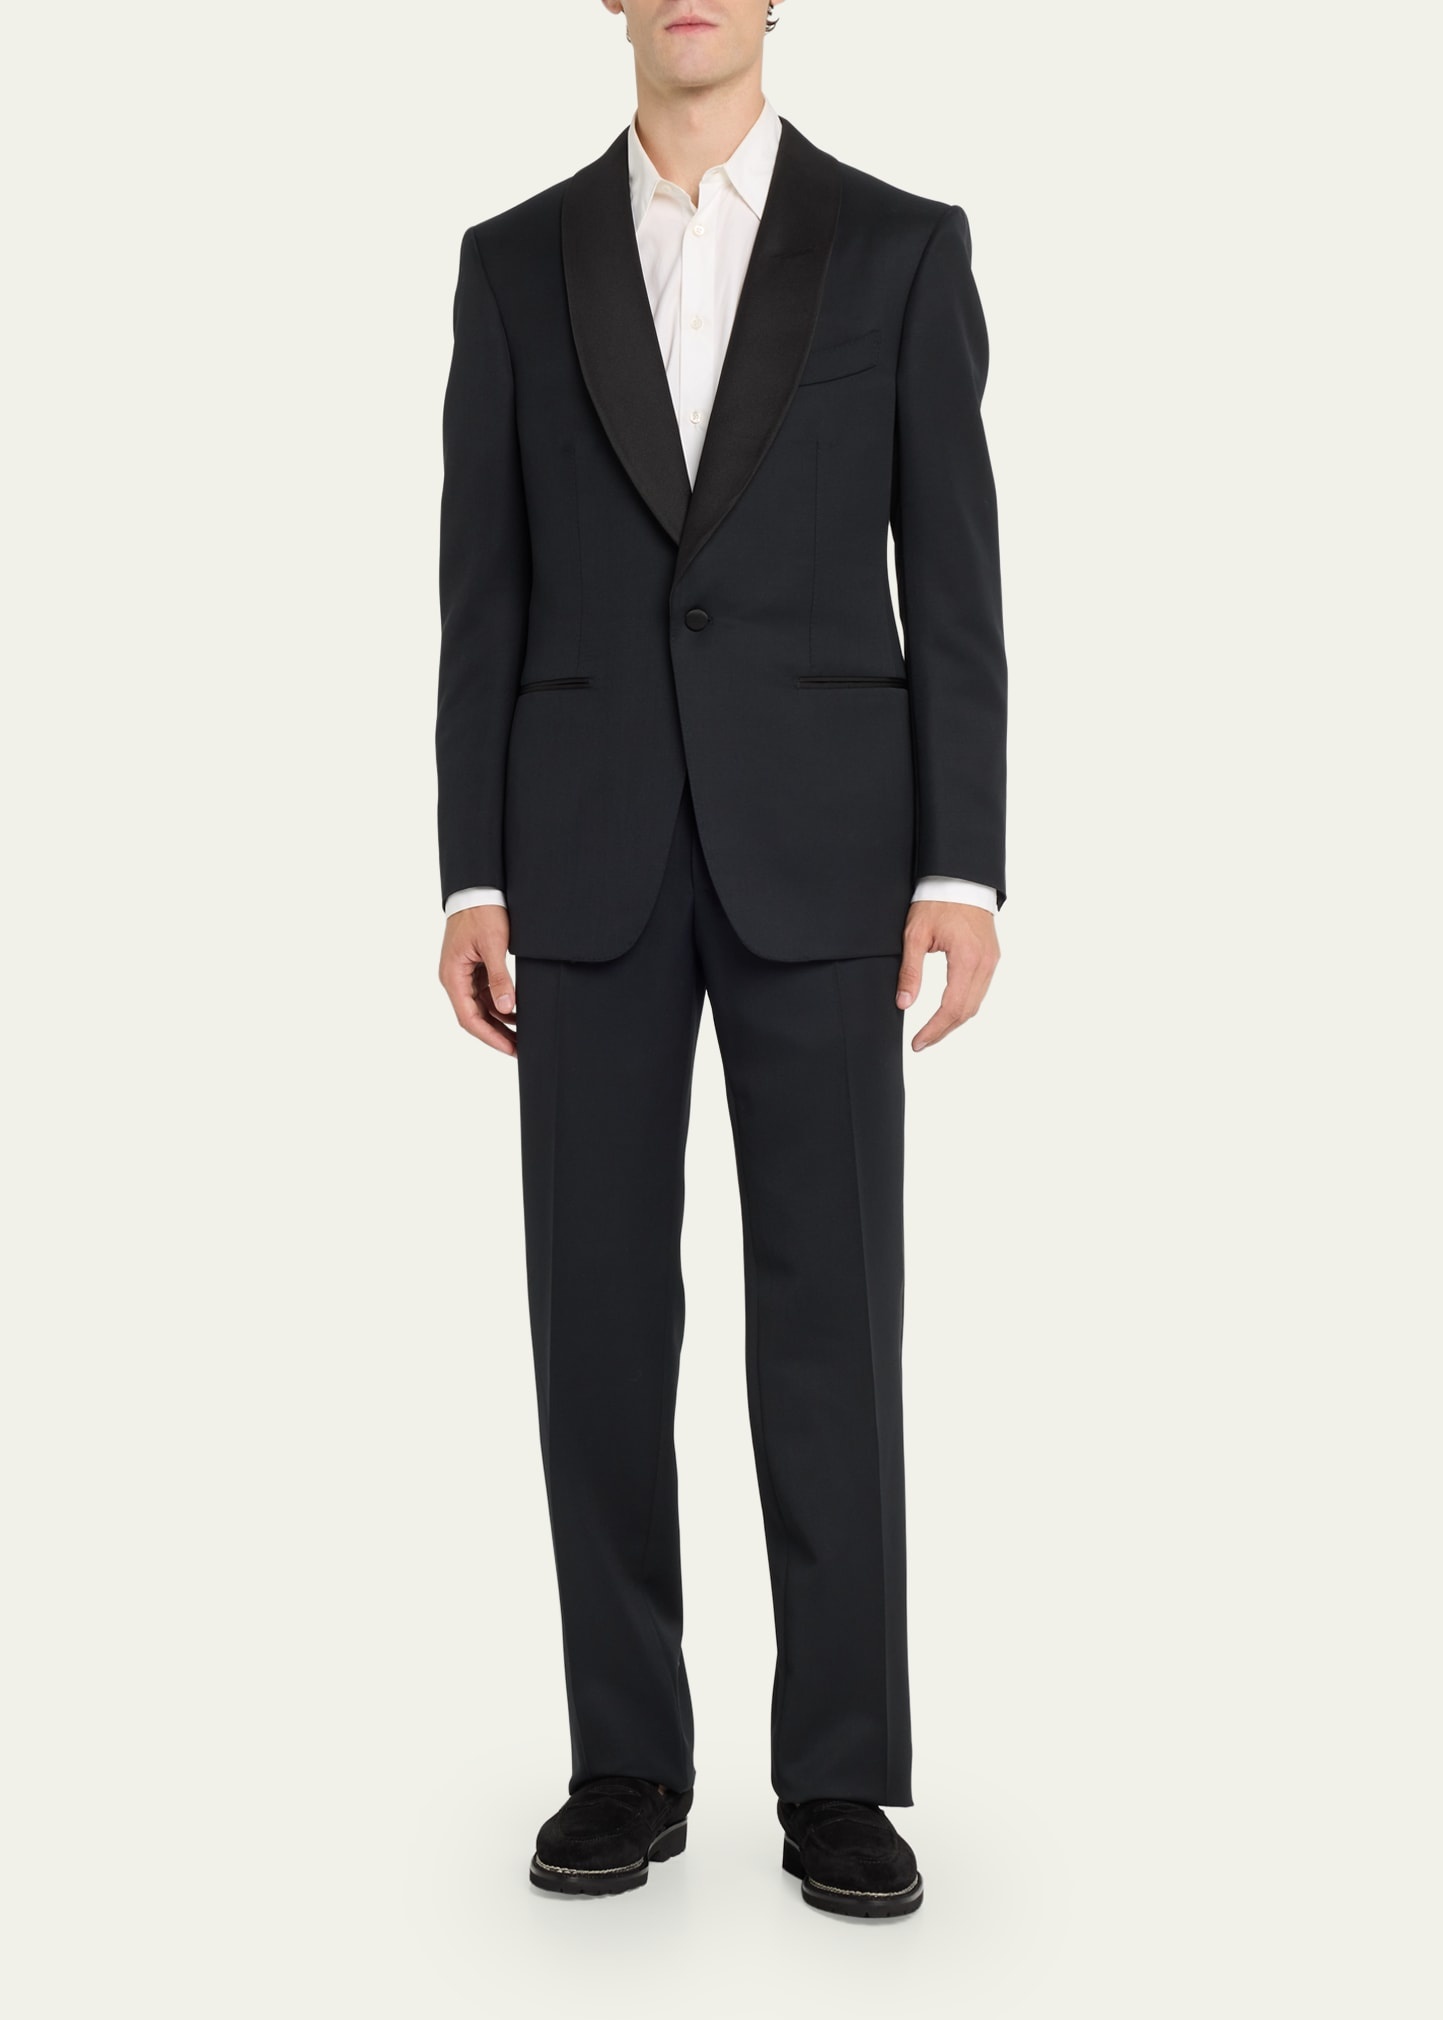 Men's Windsor Shawl Tuxedo - 2